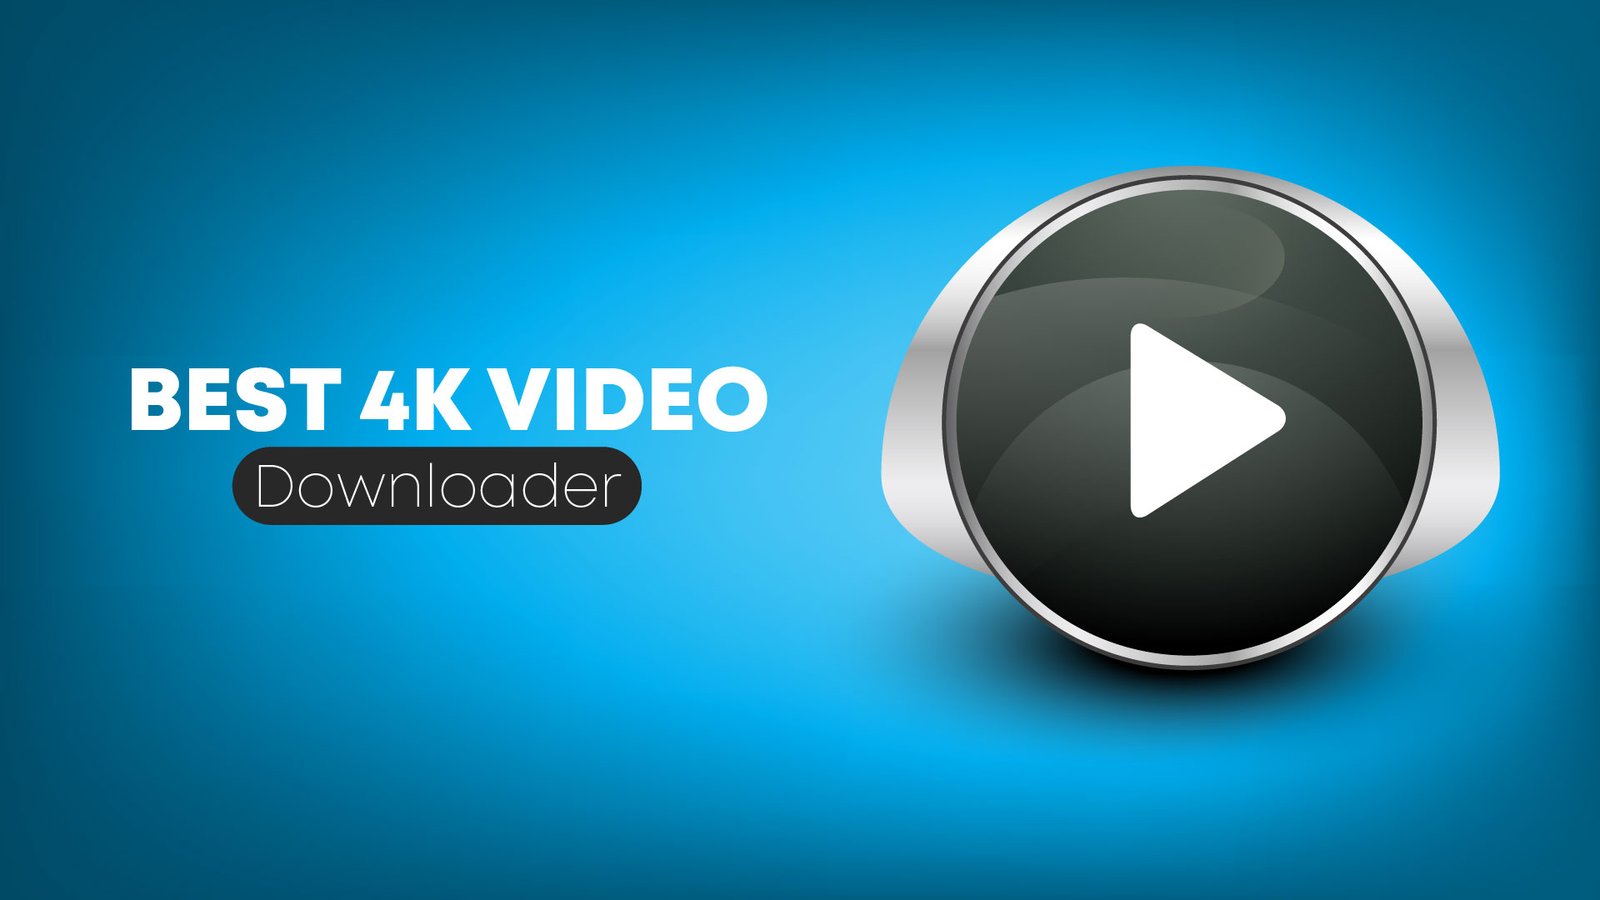 4k video downloader rar